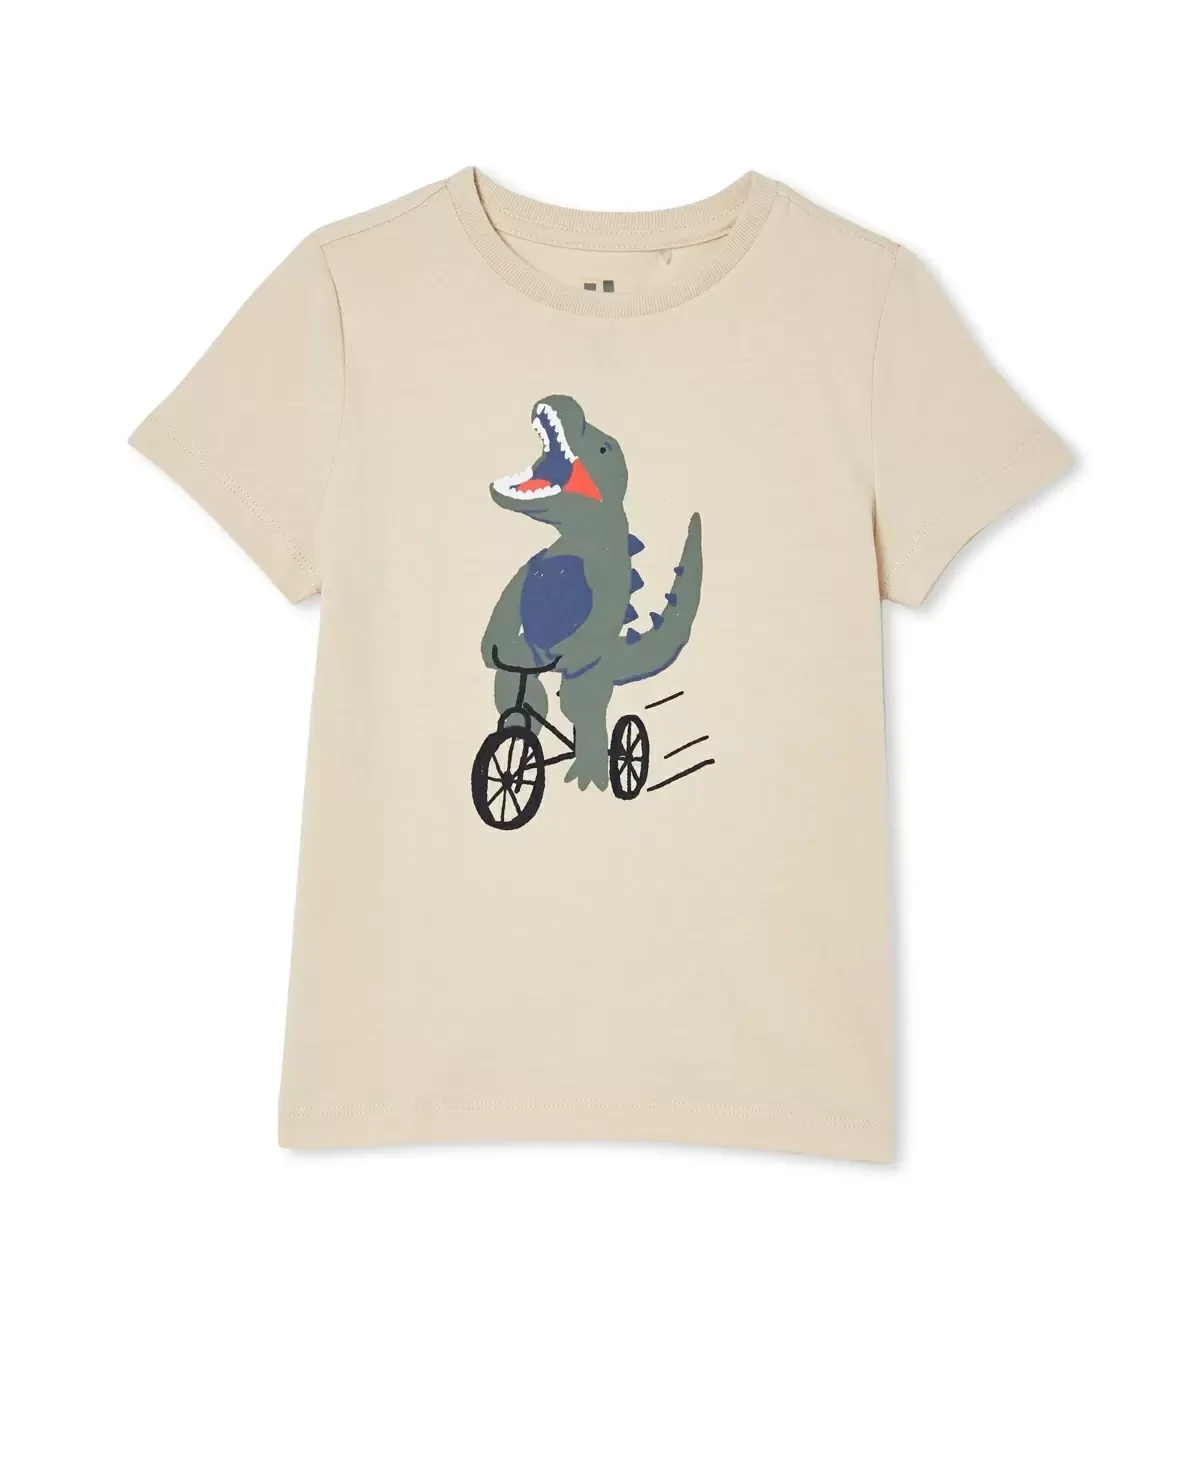 Cotton On Little Boys Max Short Sleeve T-shirt, Rainy Day Bike Dino - Size 3